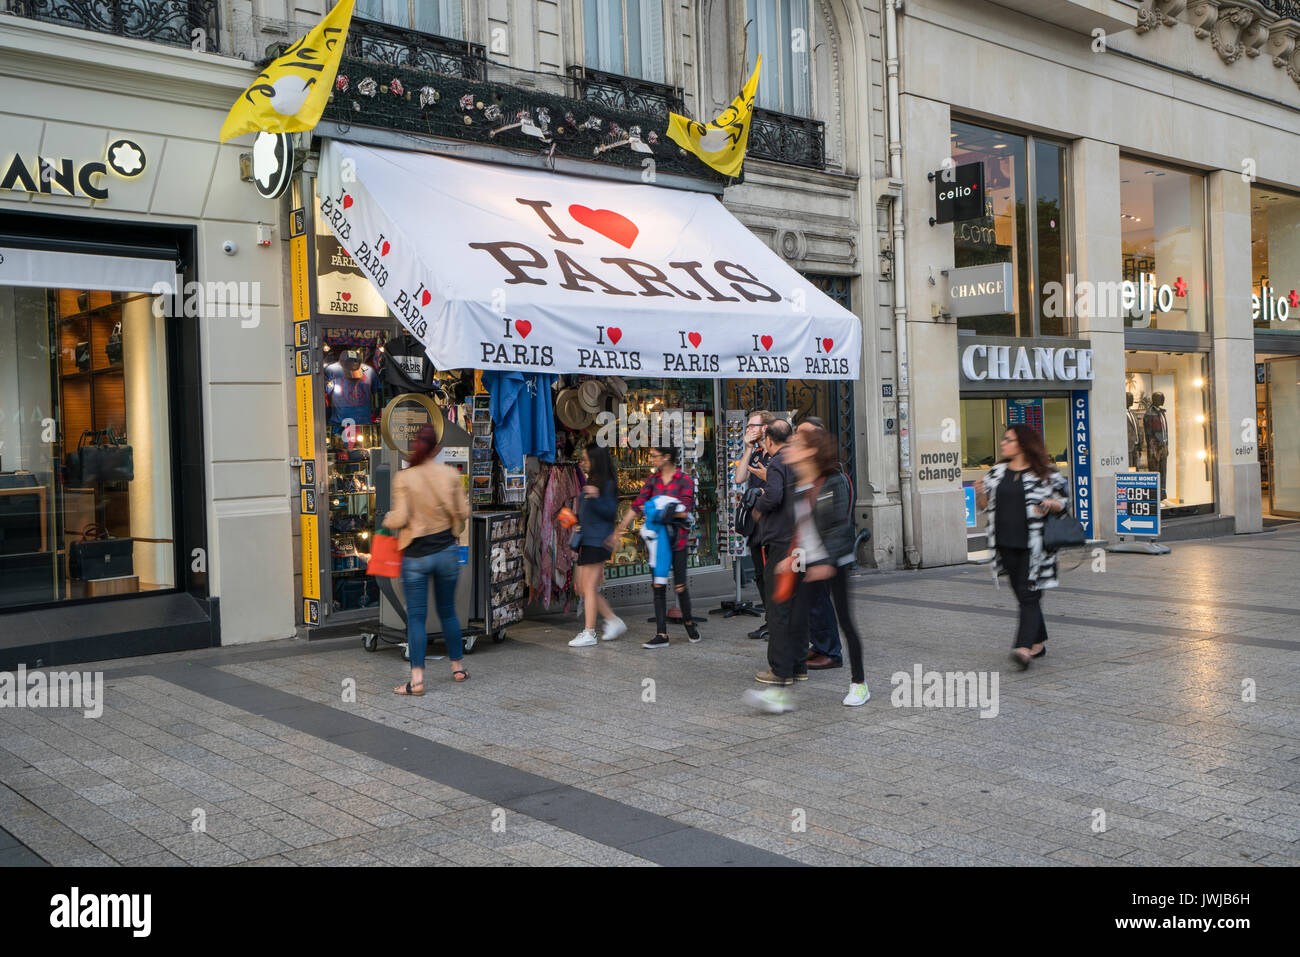 Souvenirs shop on the street in Paris Stock Photo